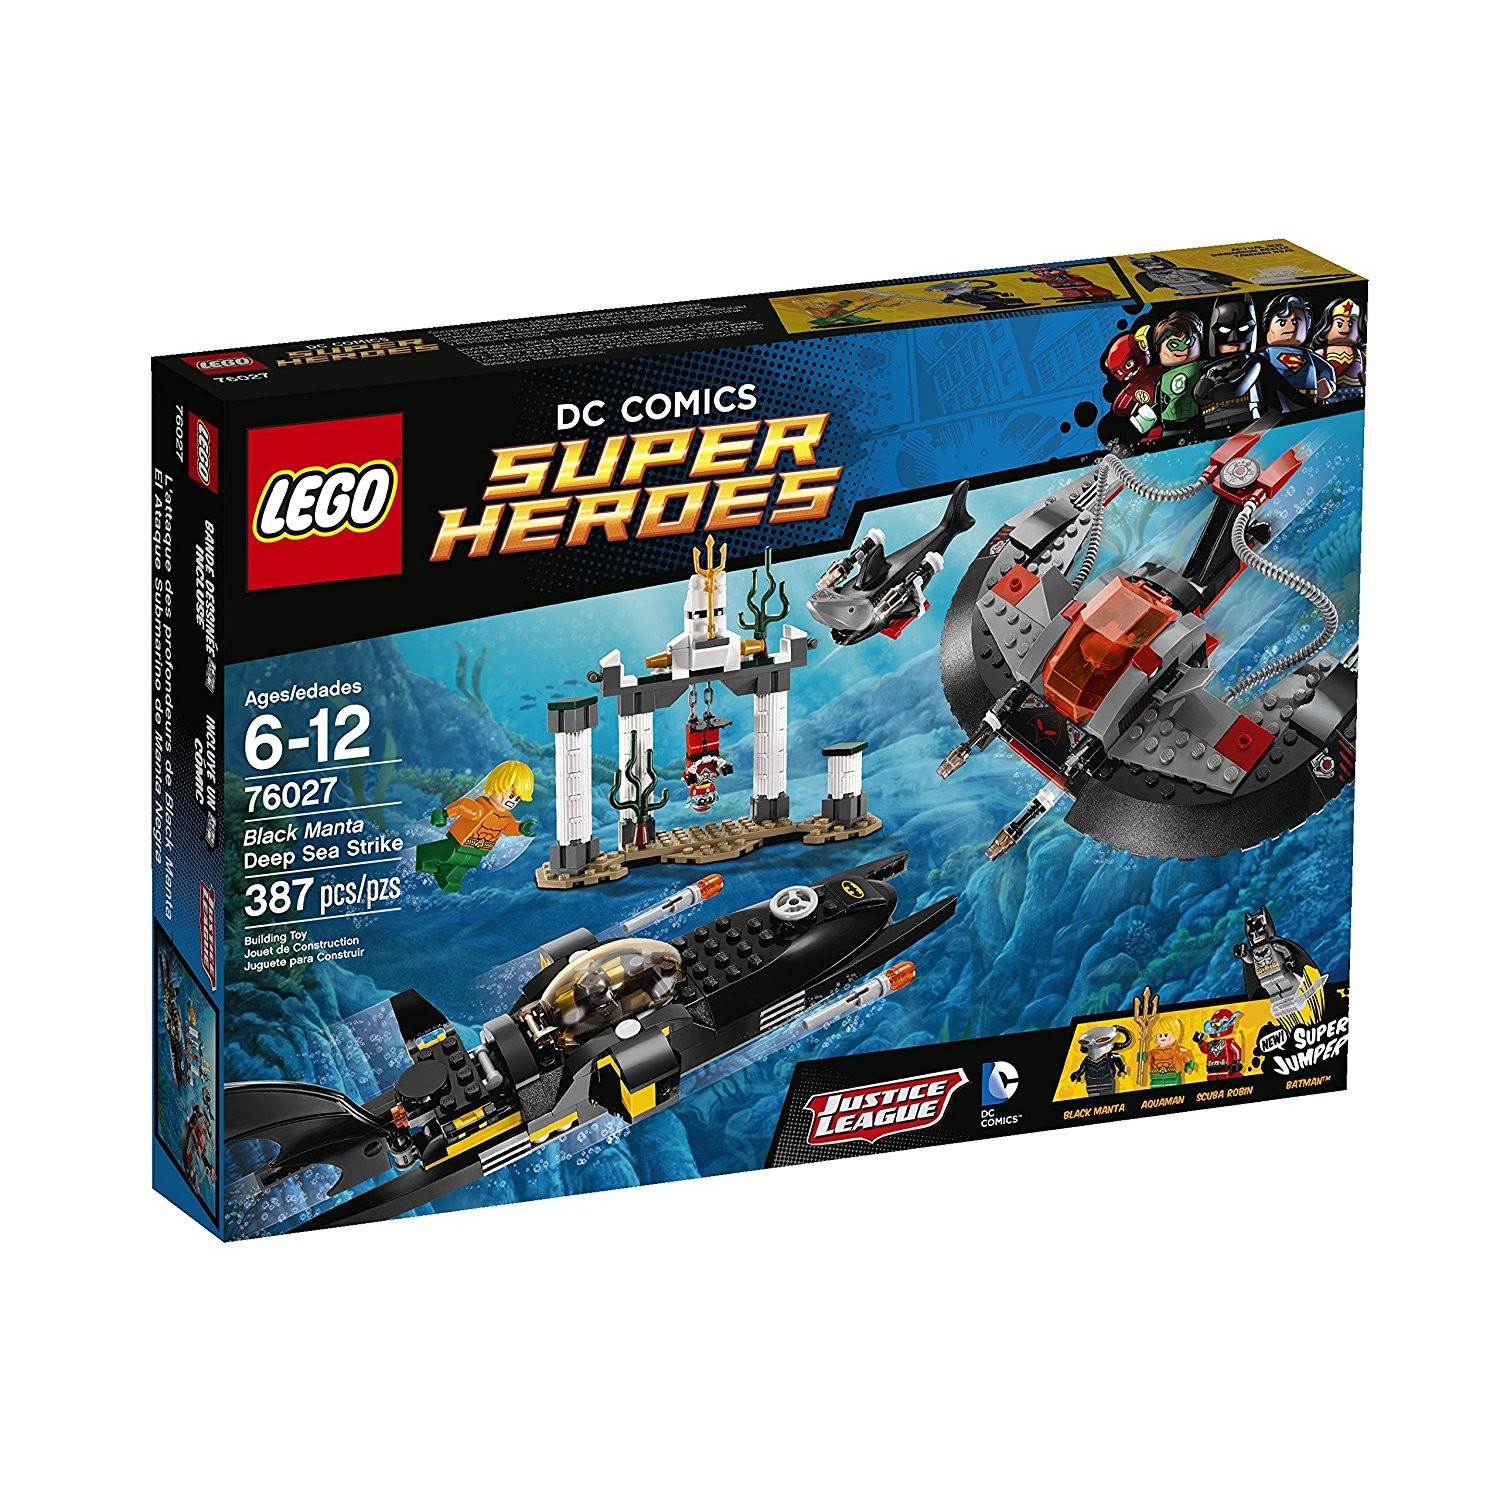 LEGO DC Comics Superheroes Black Manta Deep Sea Strike - 76027